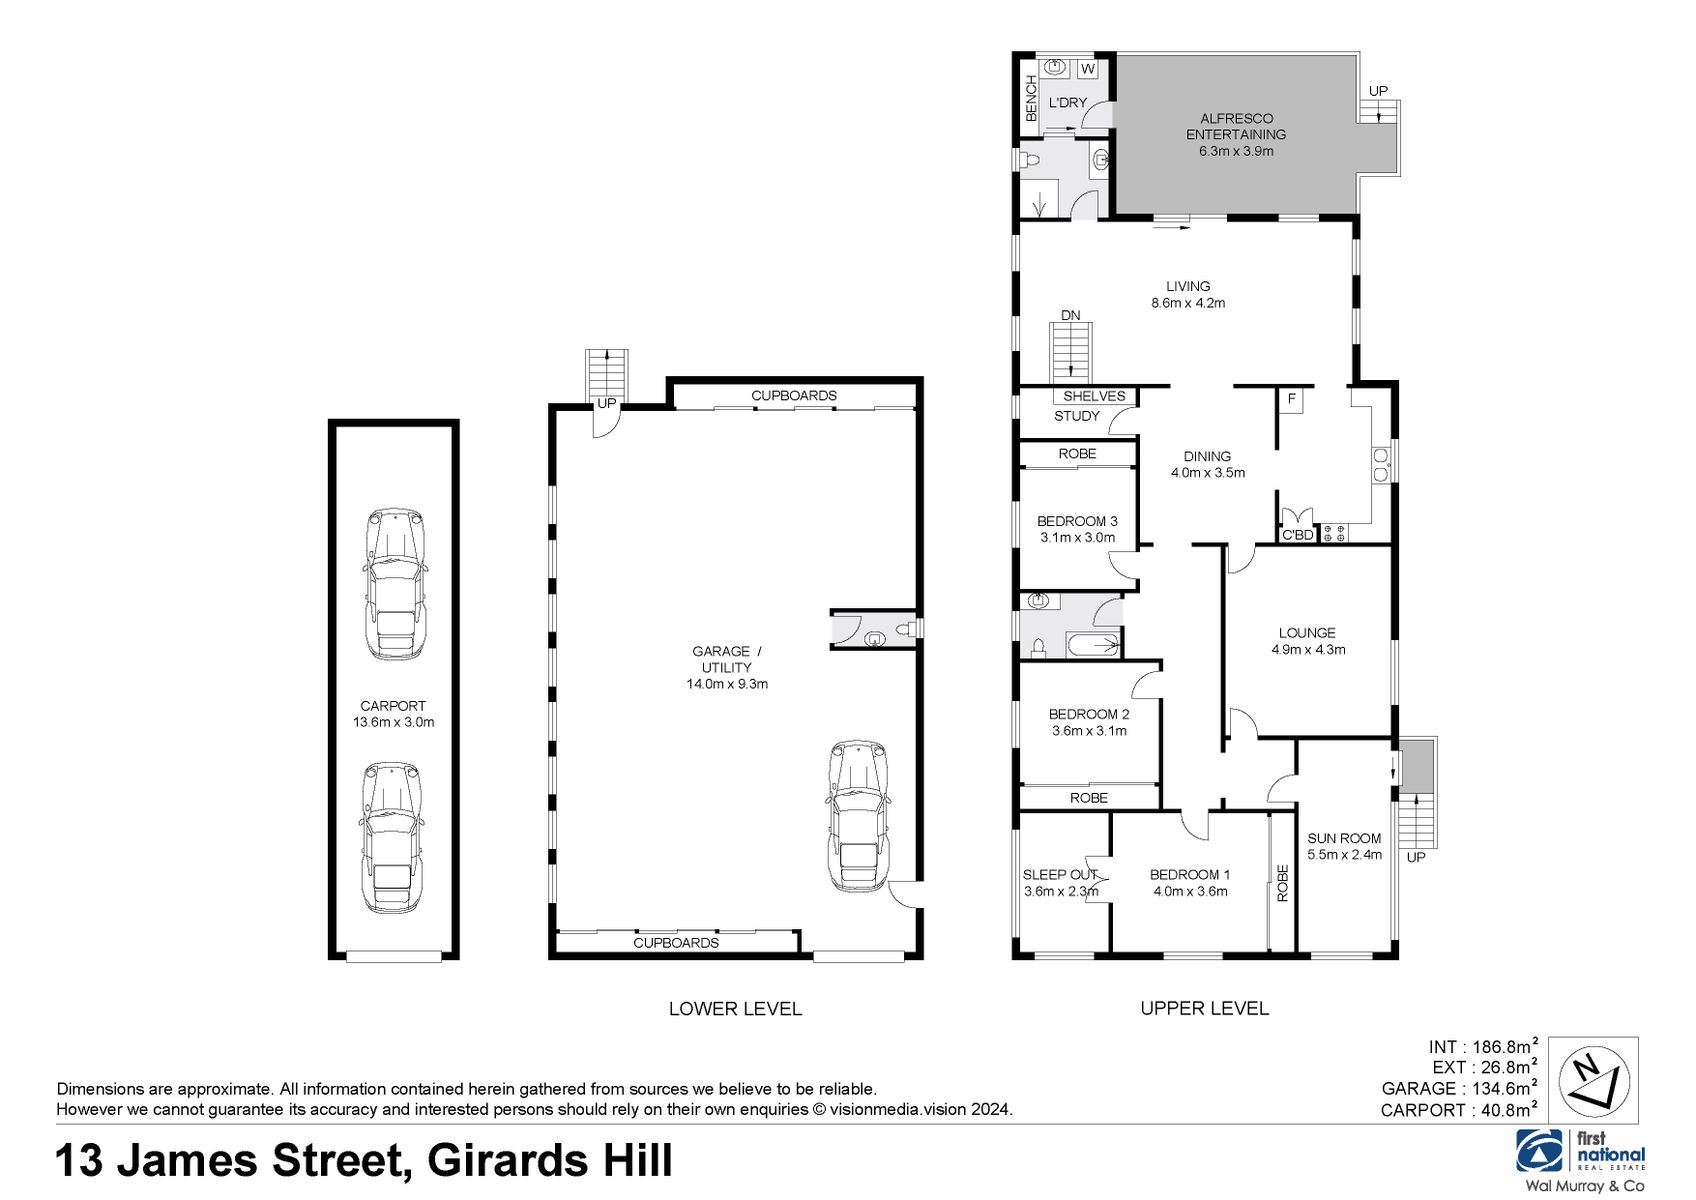 13 James Street, Girards Hill floor plan 01